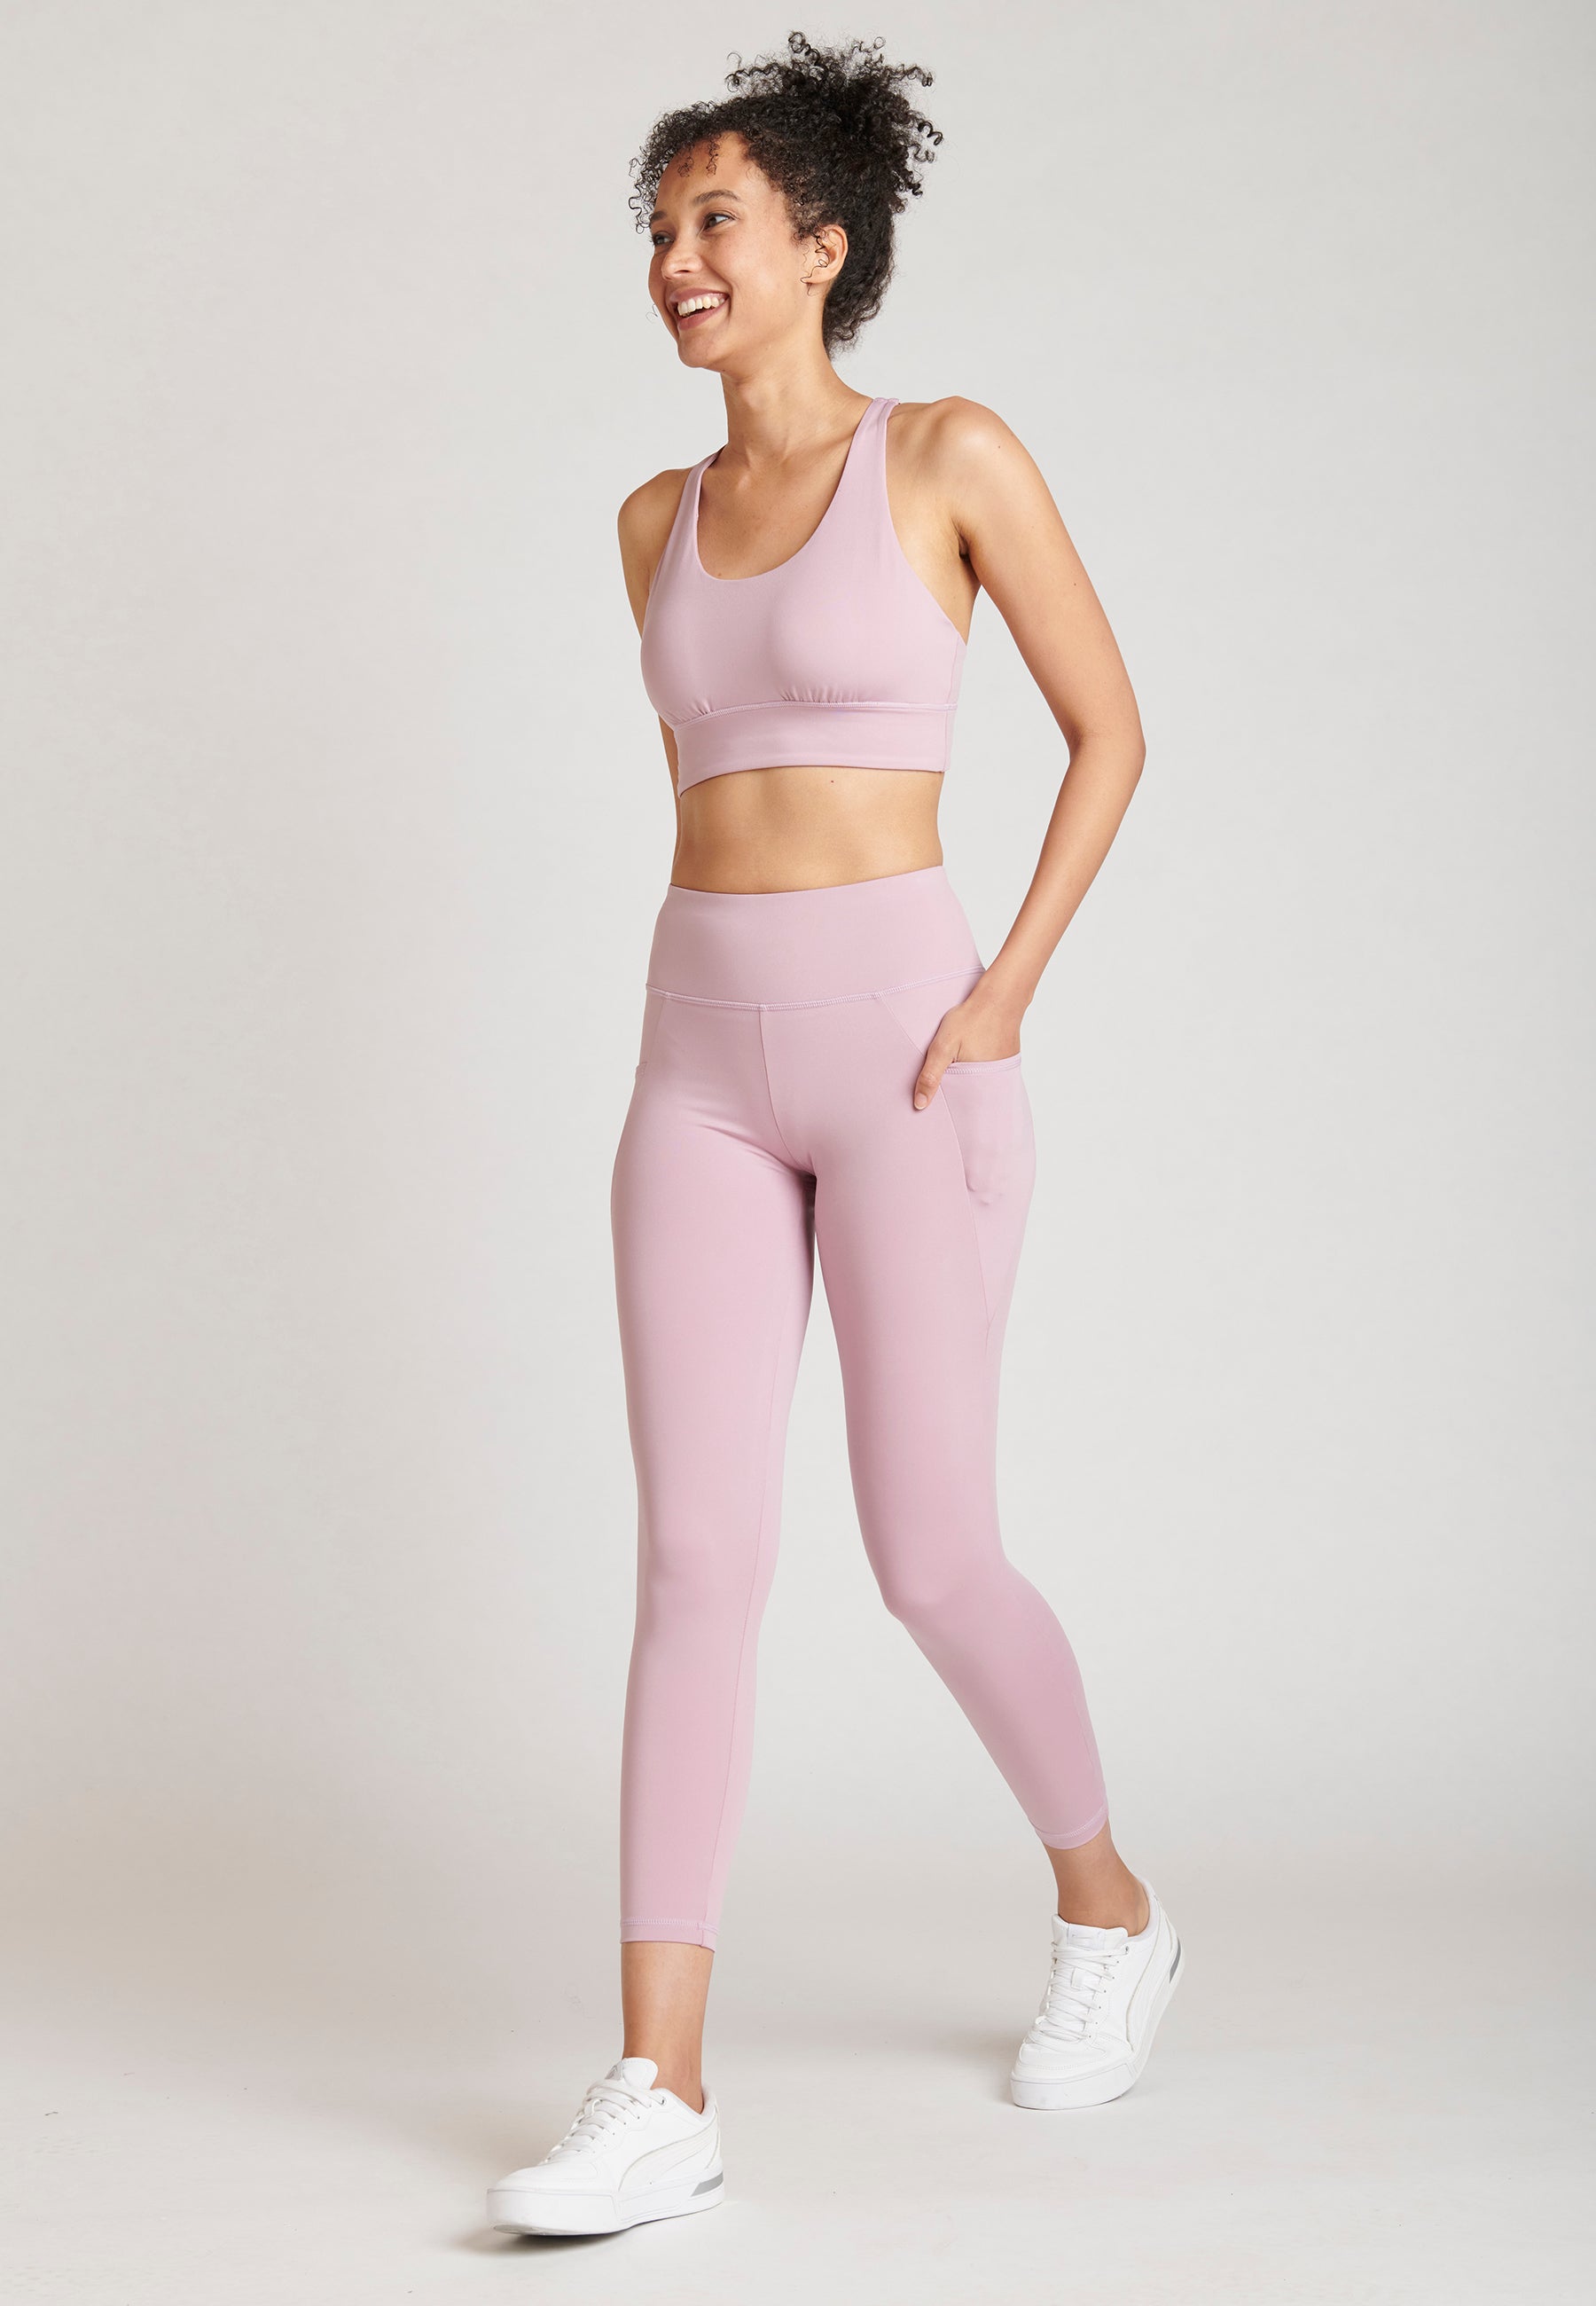 Shop JOCKEY Women's Tencel Lyocell Relaxed Fit Yoga Pants. – INEZY